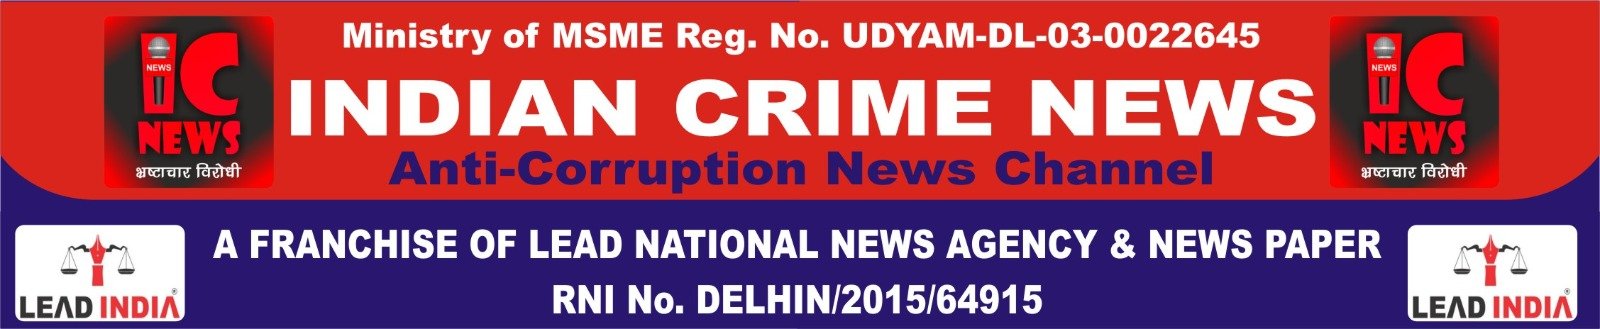 Indian Crime News